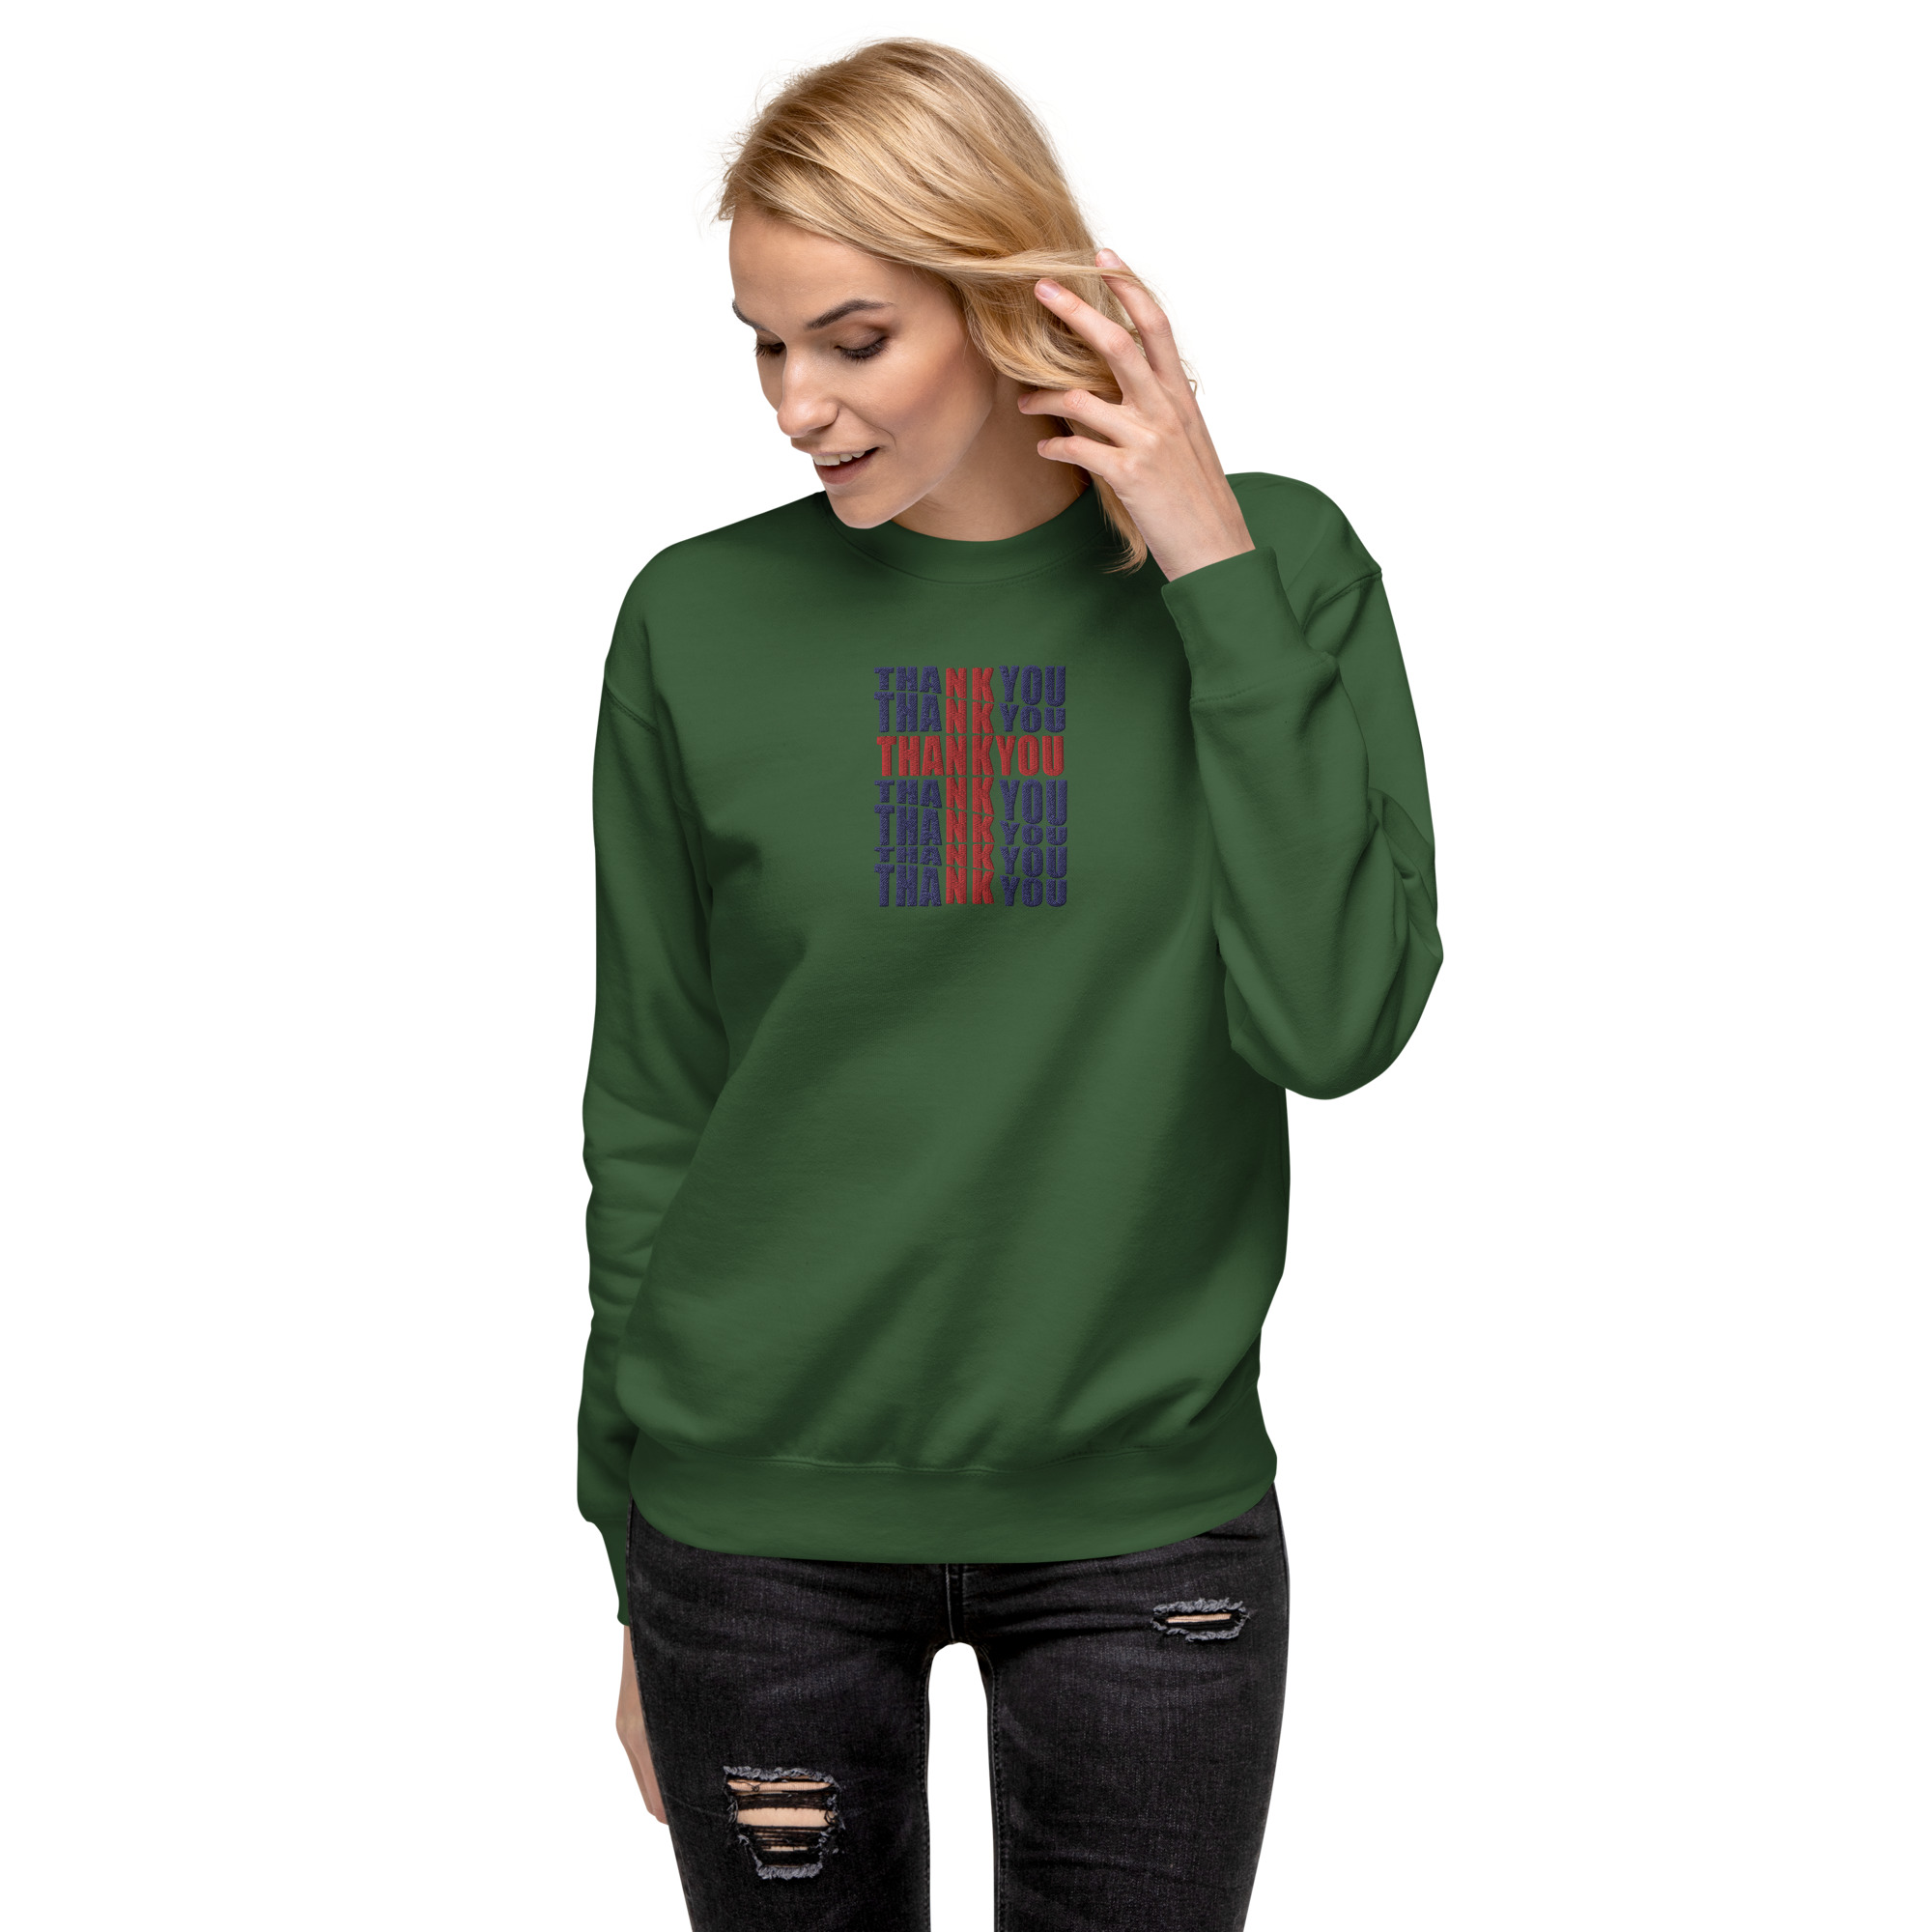 unisex-premium-sweatshirt-forest-green-front-6665bf1e966d9.jpg